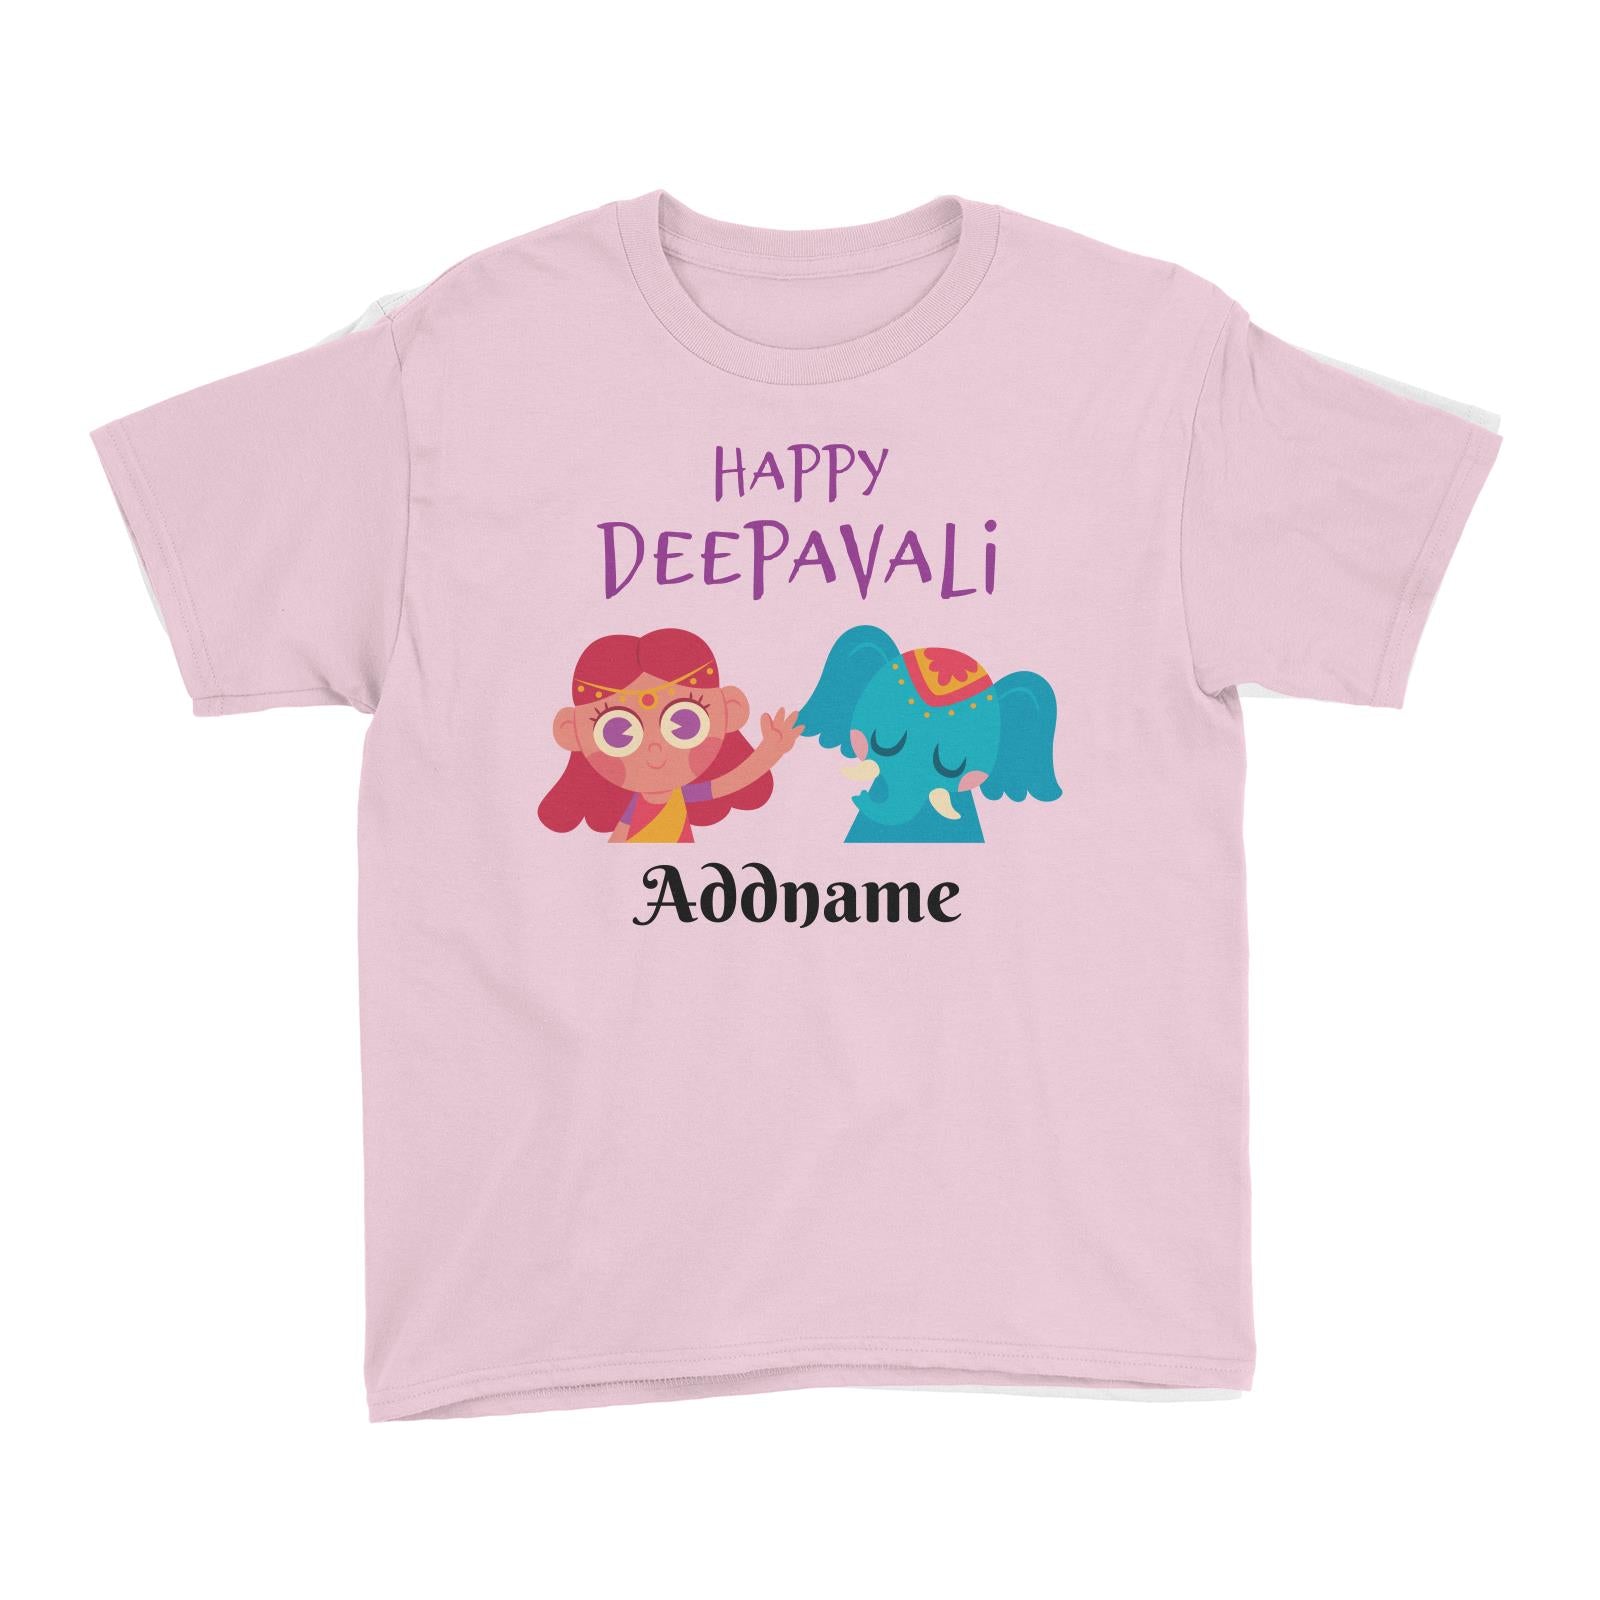 Deepavali Series Little Girl Wishes You Happy Deepavali Kid's T-Shirt